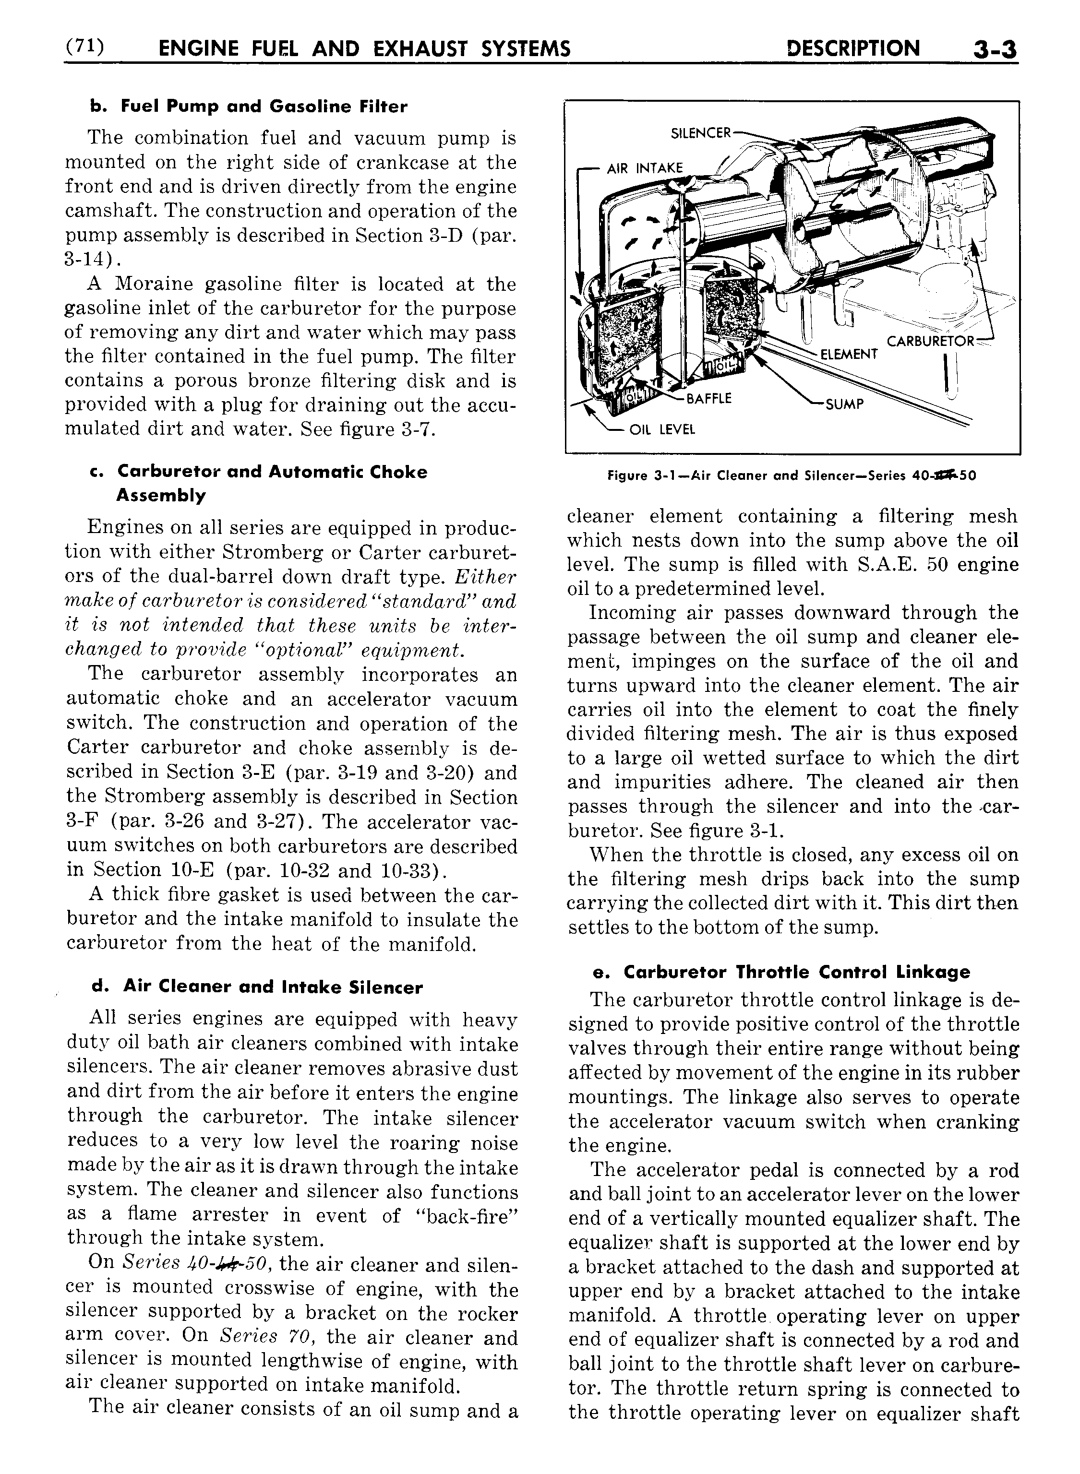 n_04 1951 Buick Shop Manual - Engine Fuel & Exhaust-003-003.jpg